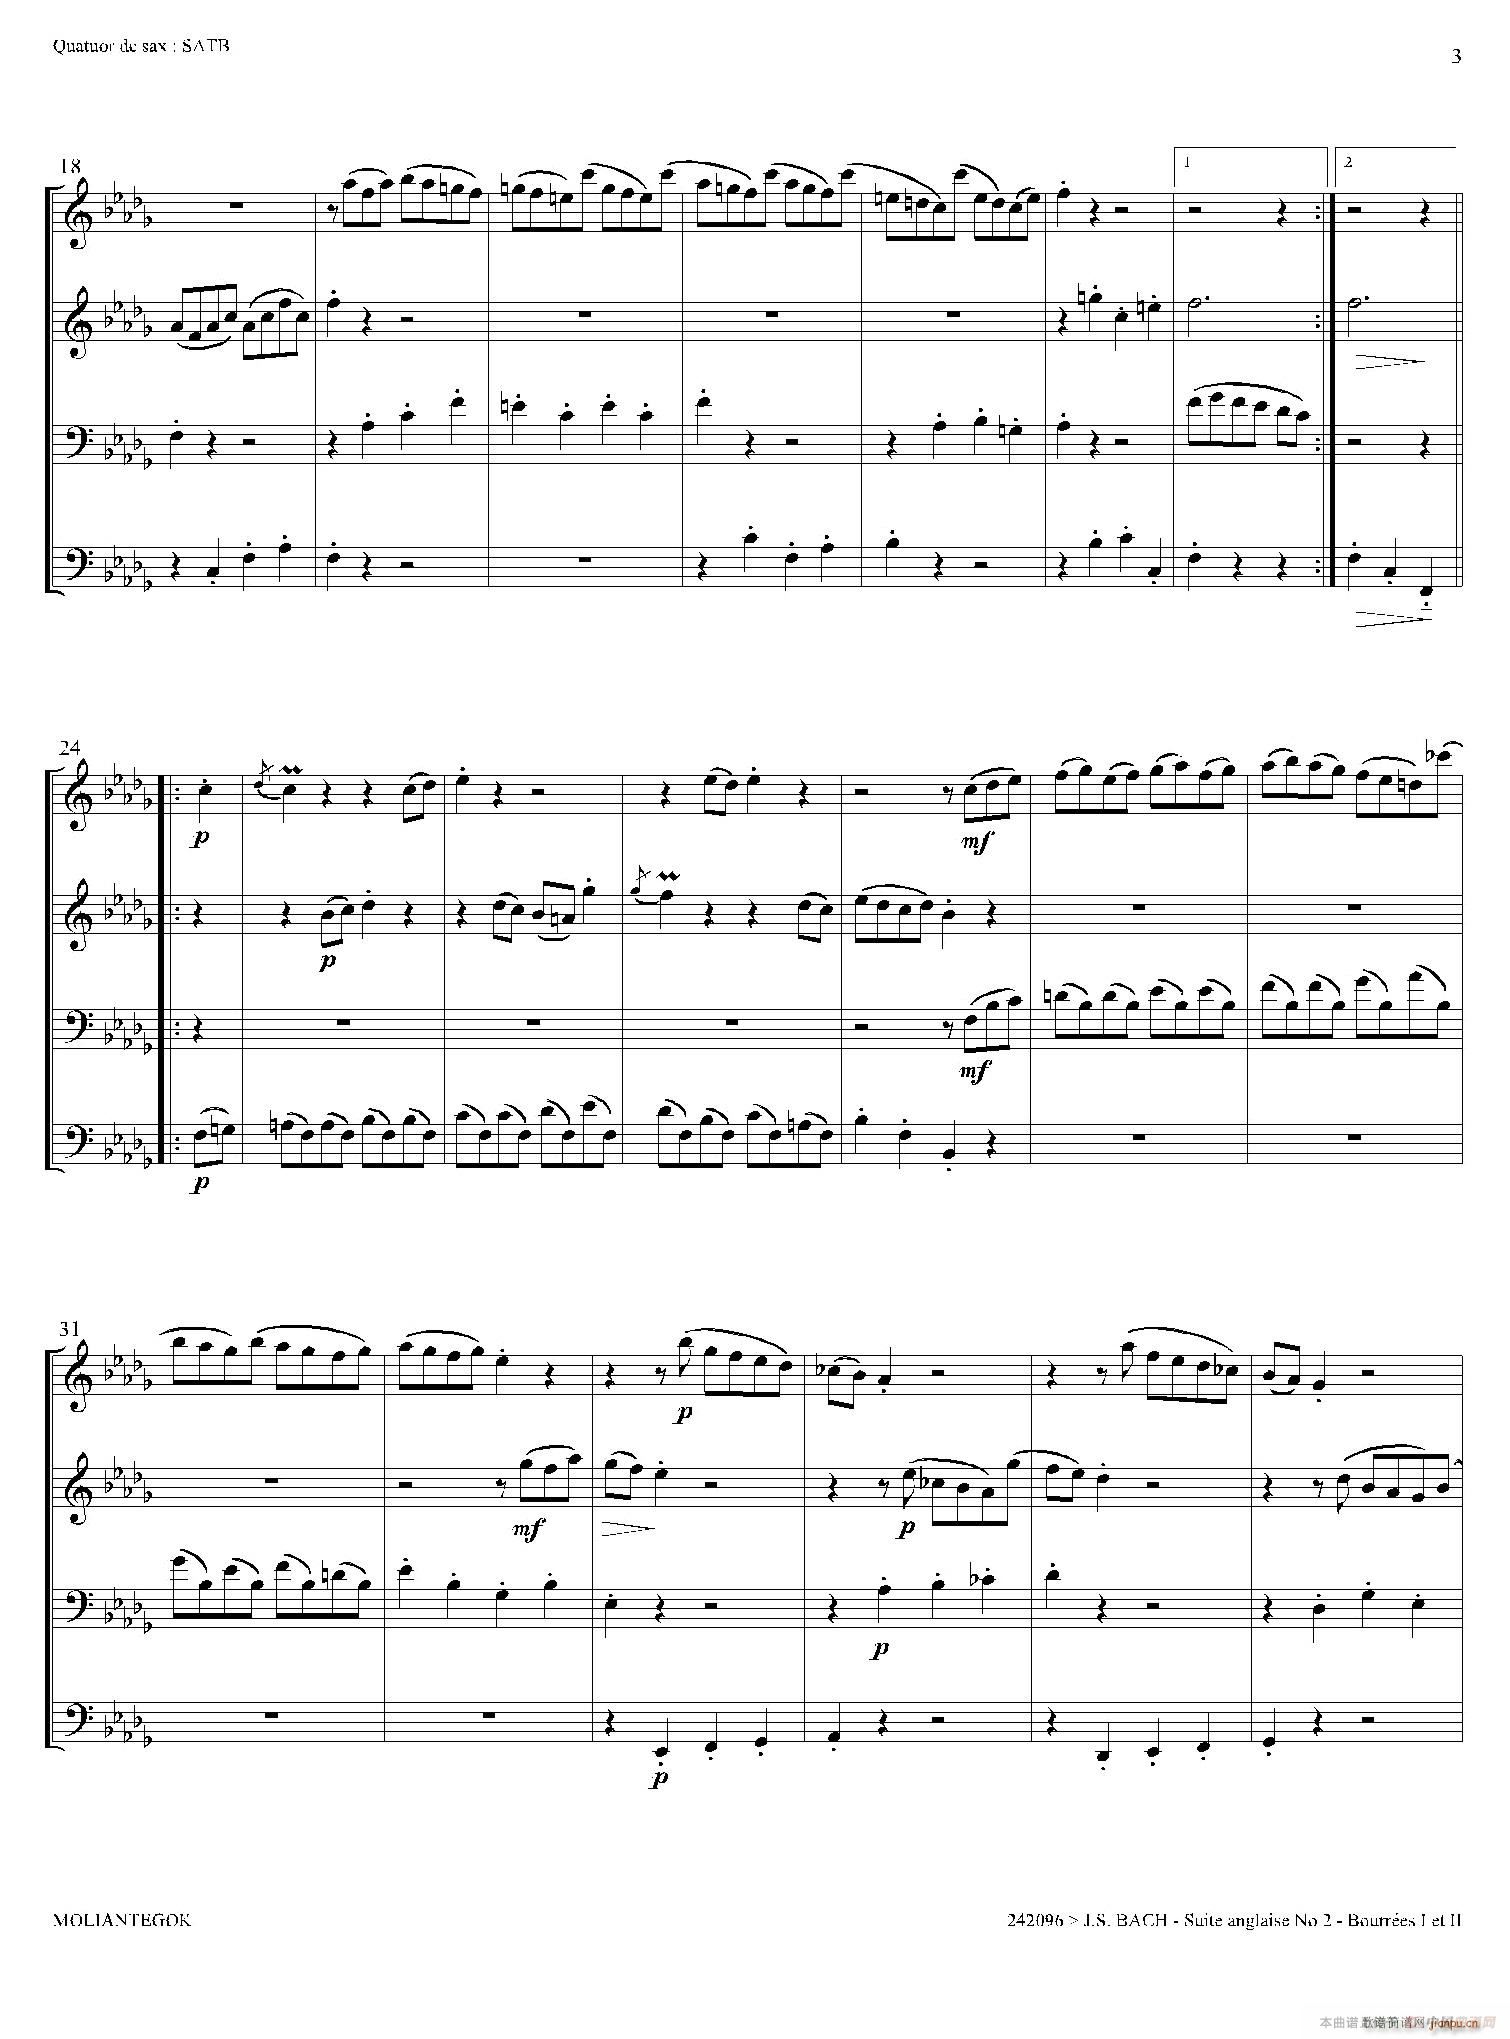 Suite anglaise No 2 BWV 807 法国组曲之二 布列舞曲 四重奏 2